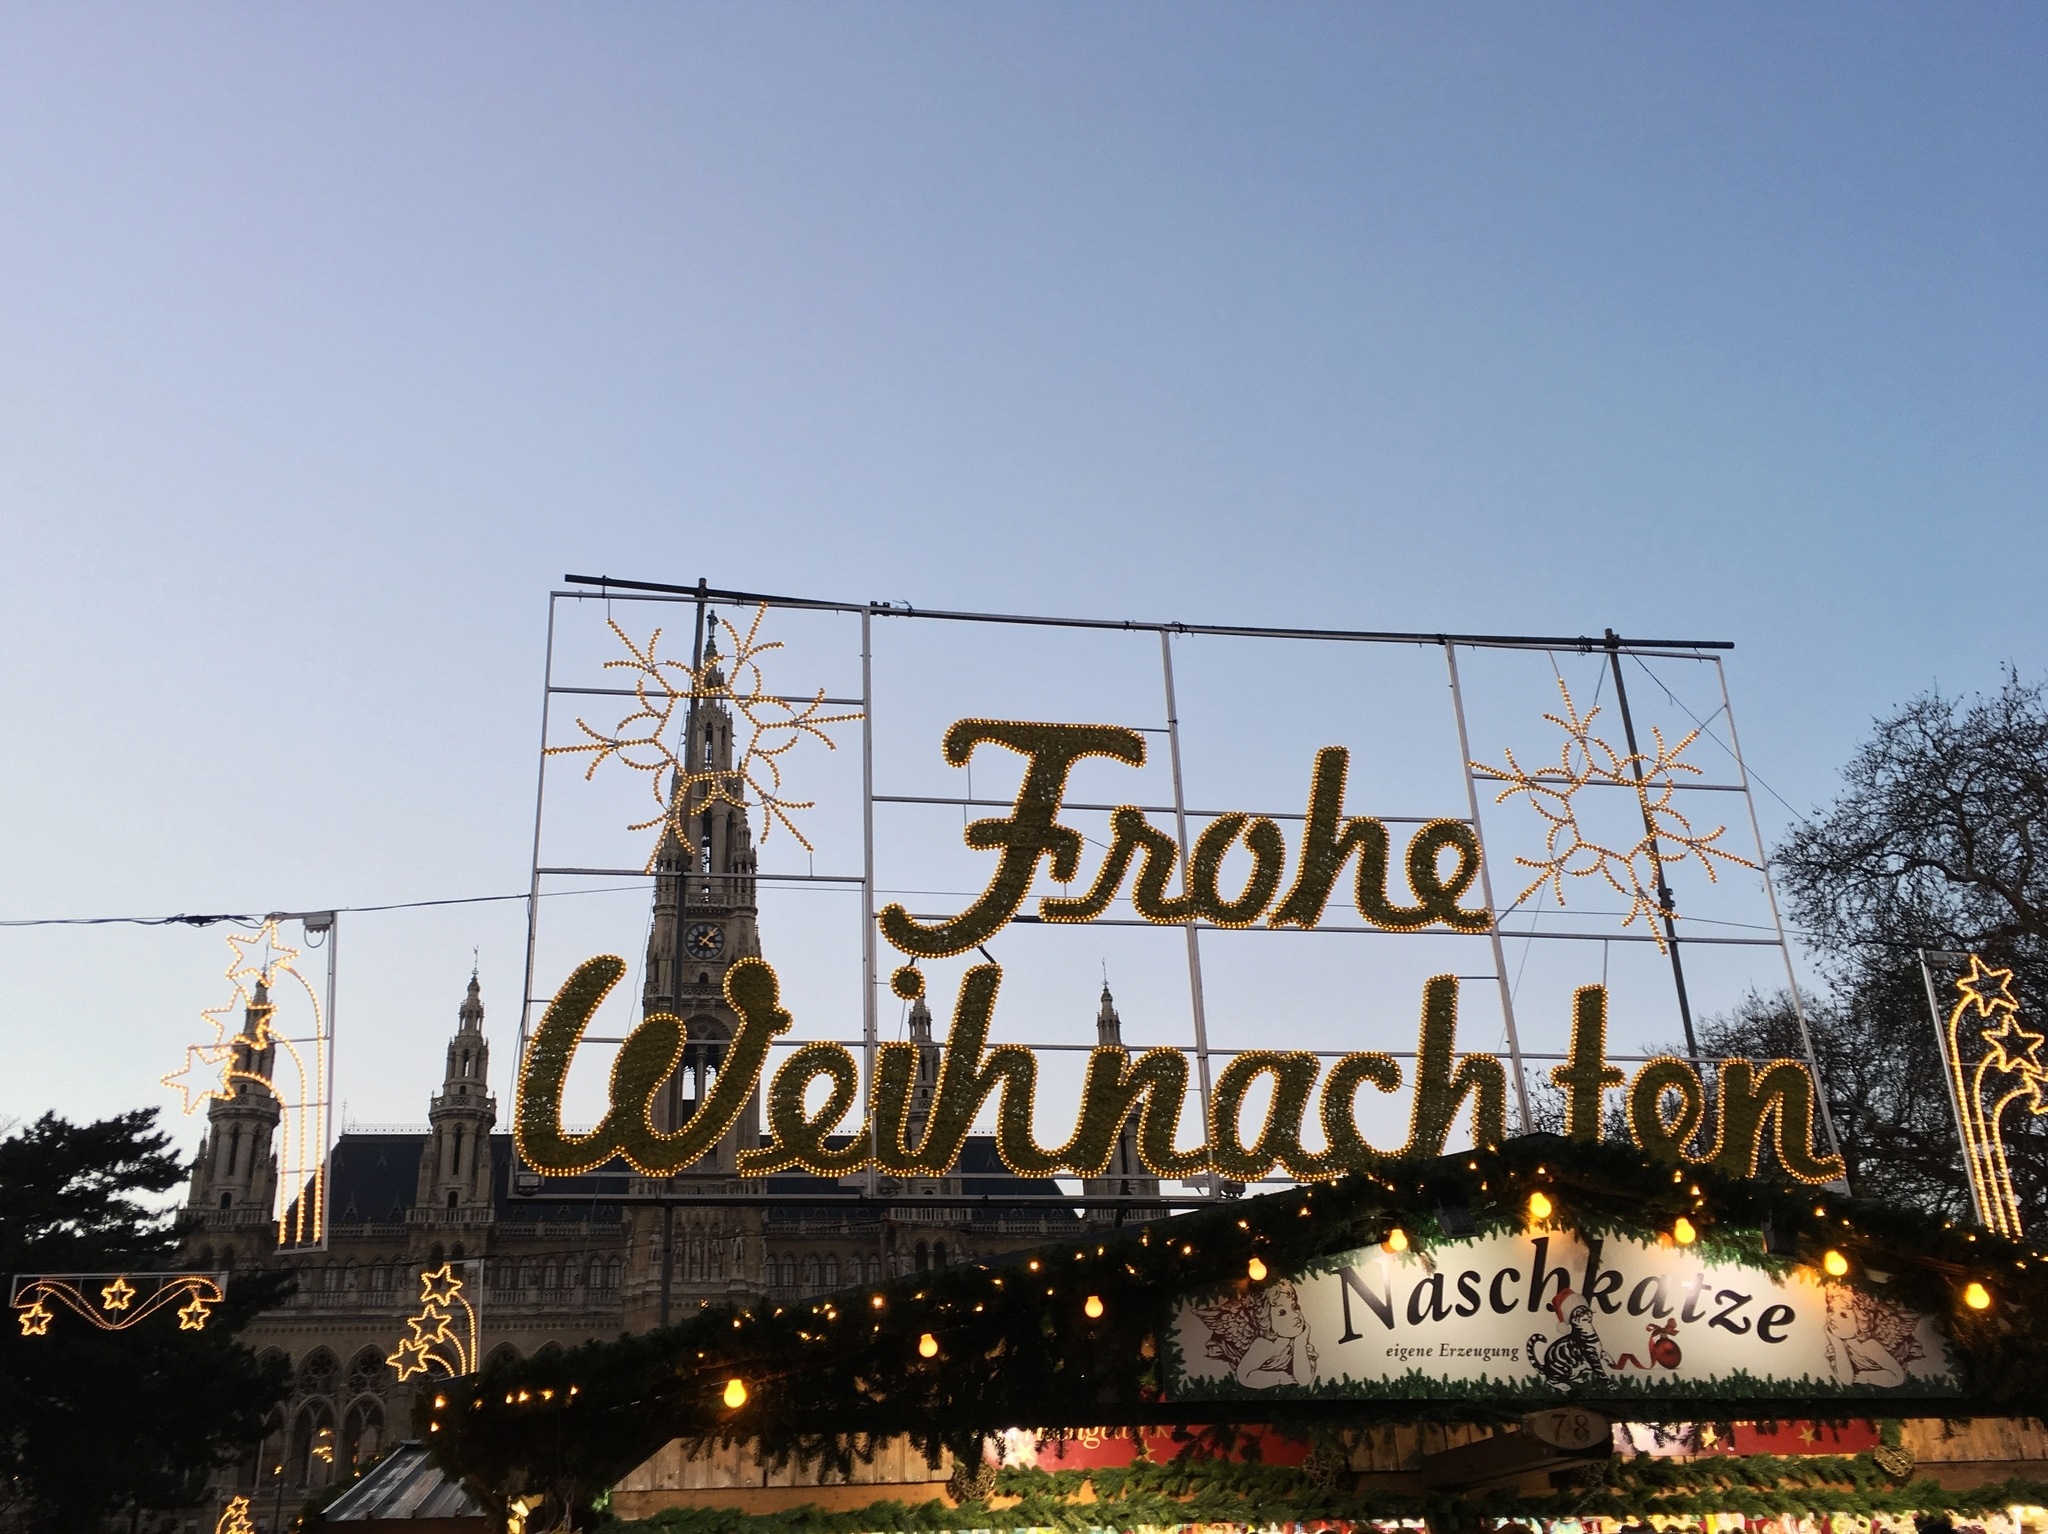 Waltzing Through Vienna at Christmas